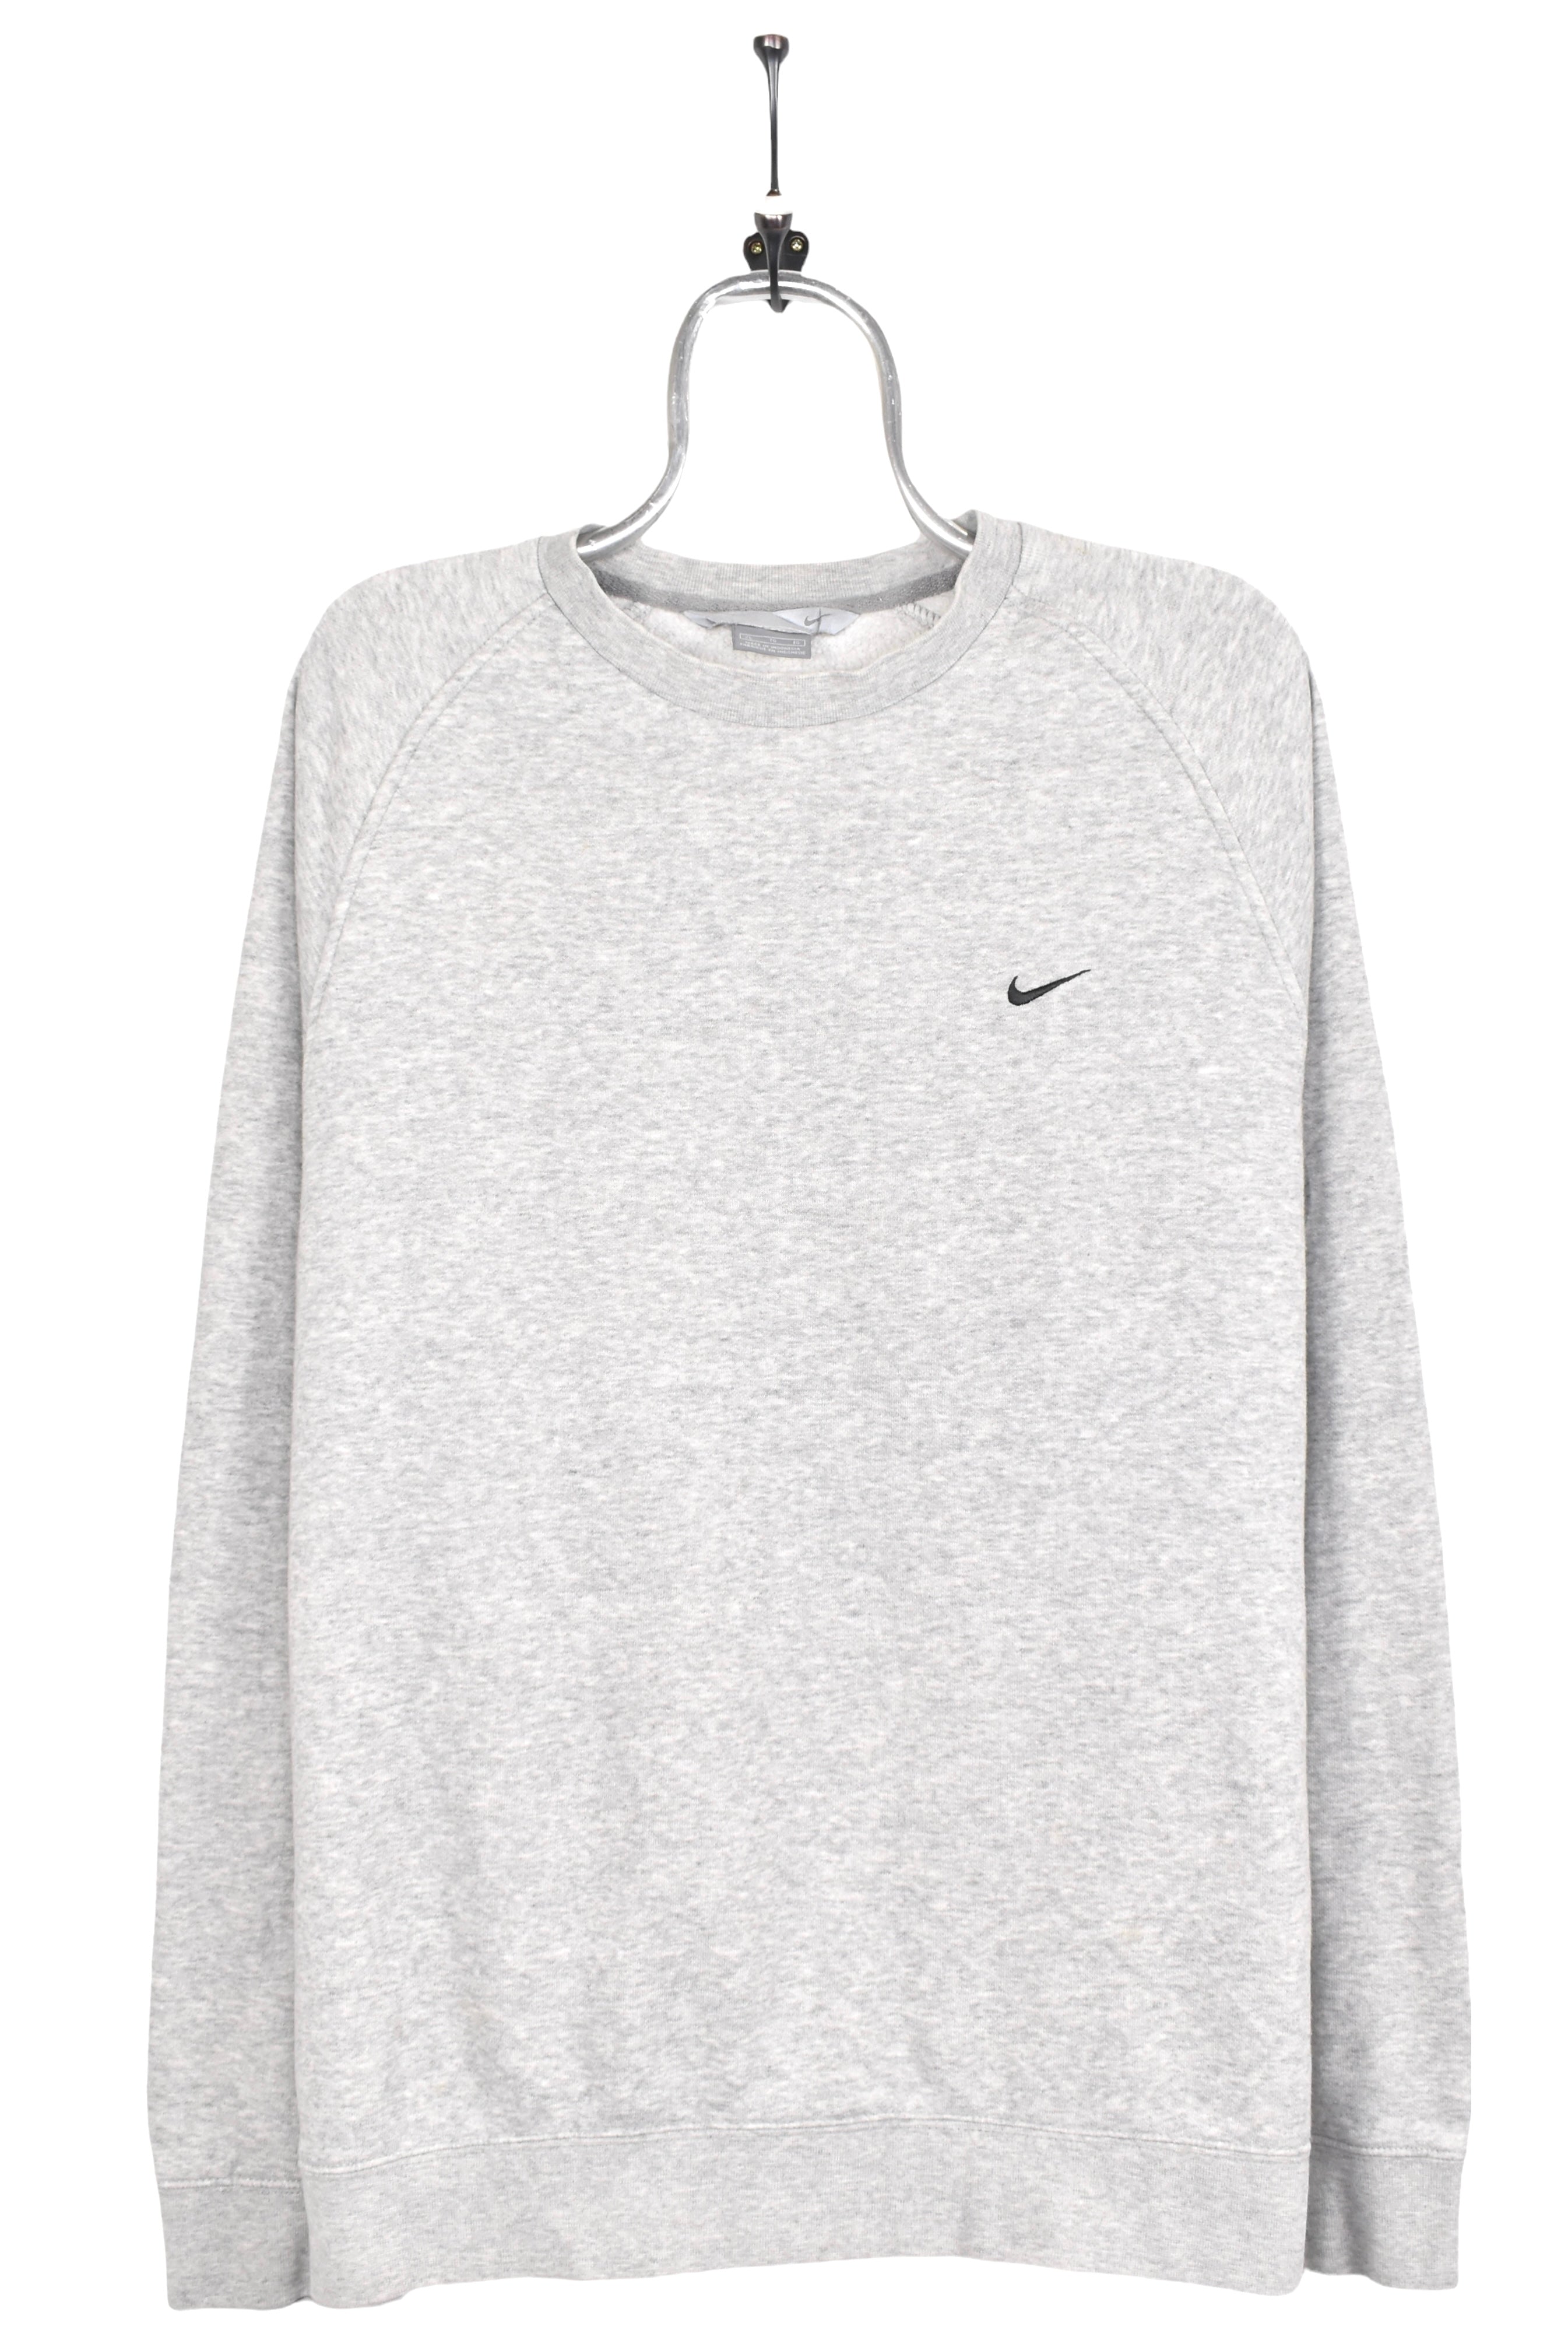 Vintage Nike sweatshirt, grey embroidered crewneck - AU XL NIKE